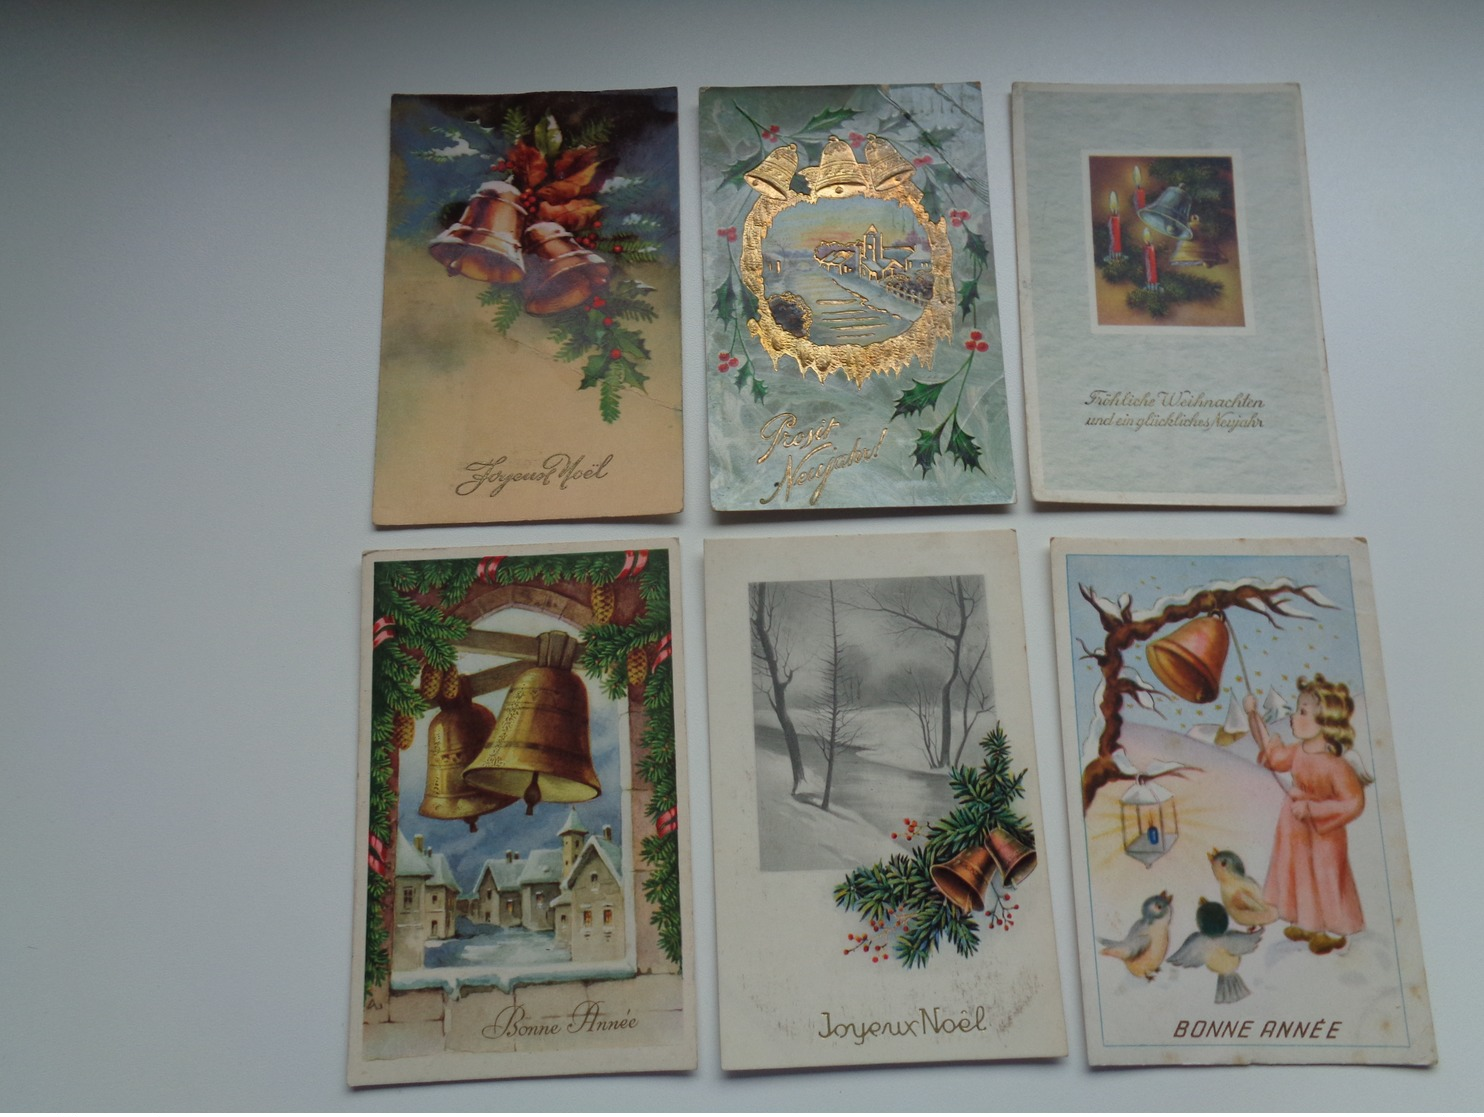 Beau lot de 60 cartes postales de fantaisie  cloches  cloche    Mooi lot van 60 postkaarten fantasie  klokken  klok